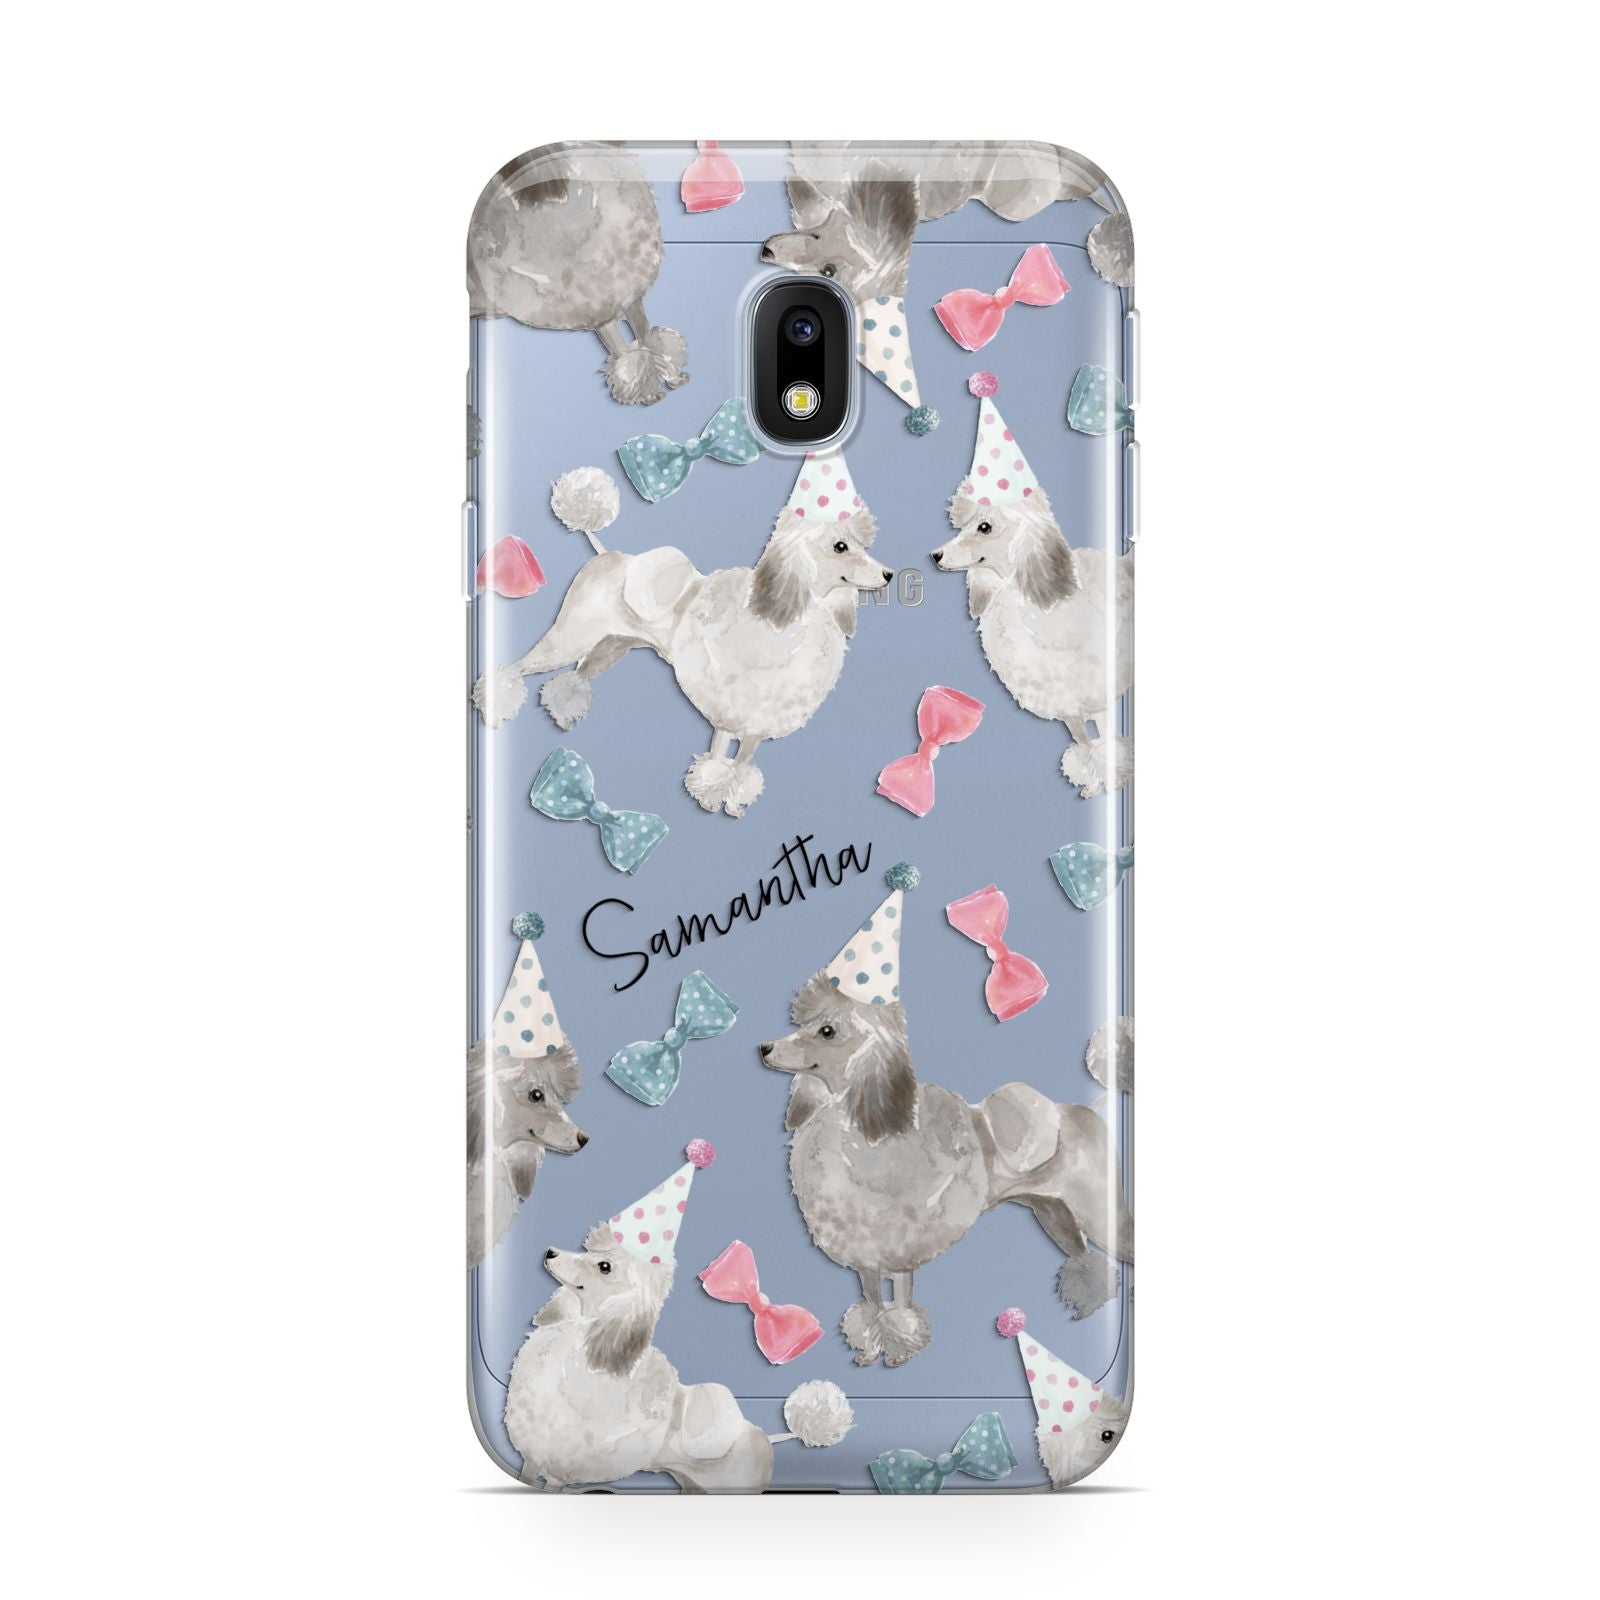 Personalised Poodle Dog Samsung Galaxy J3 2017 Case